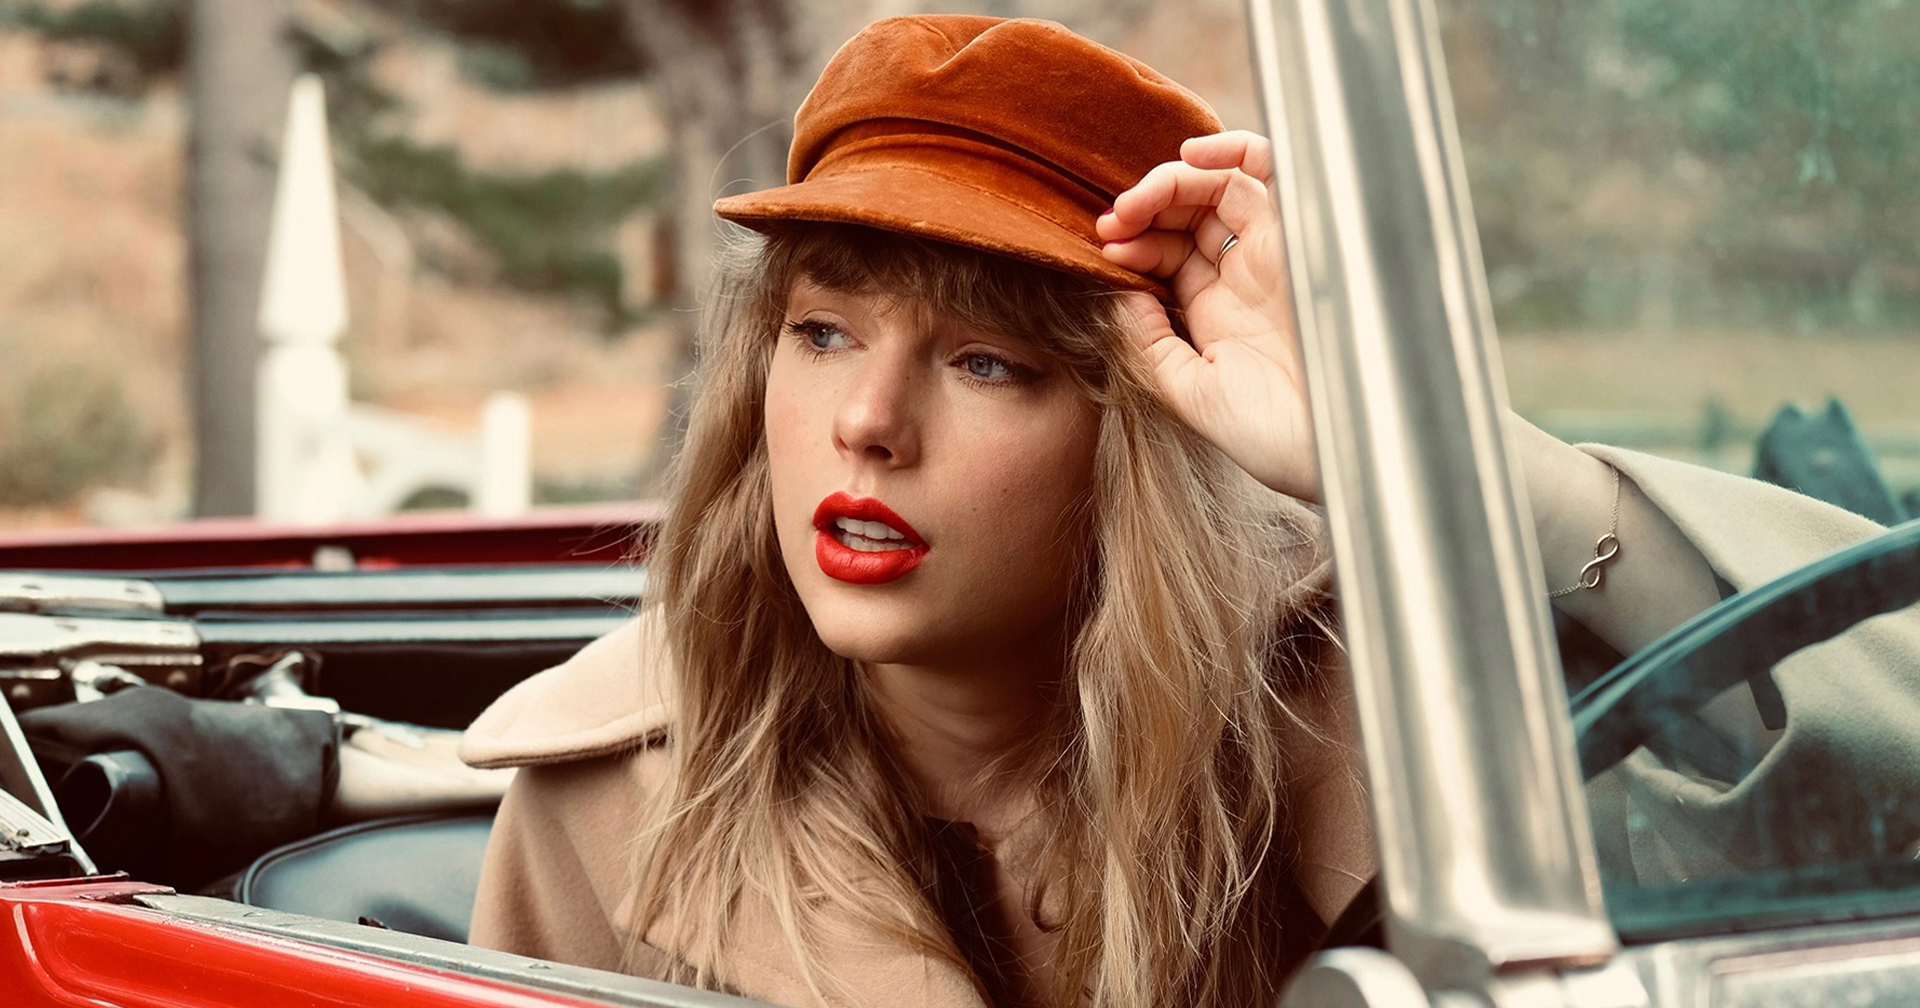 Stanford University เปิดสอนหลักสูตร ‘All Too Well’ วิเคราห์เจาะเพลงฮิตของ Taylor Swift